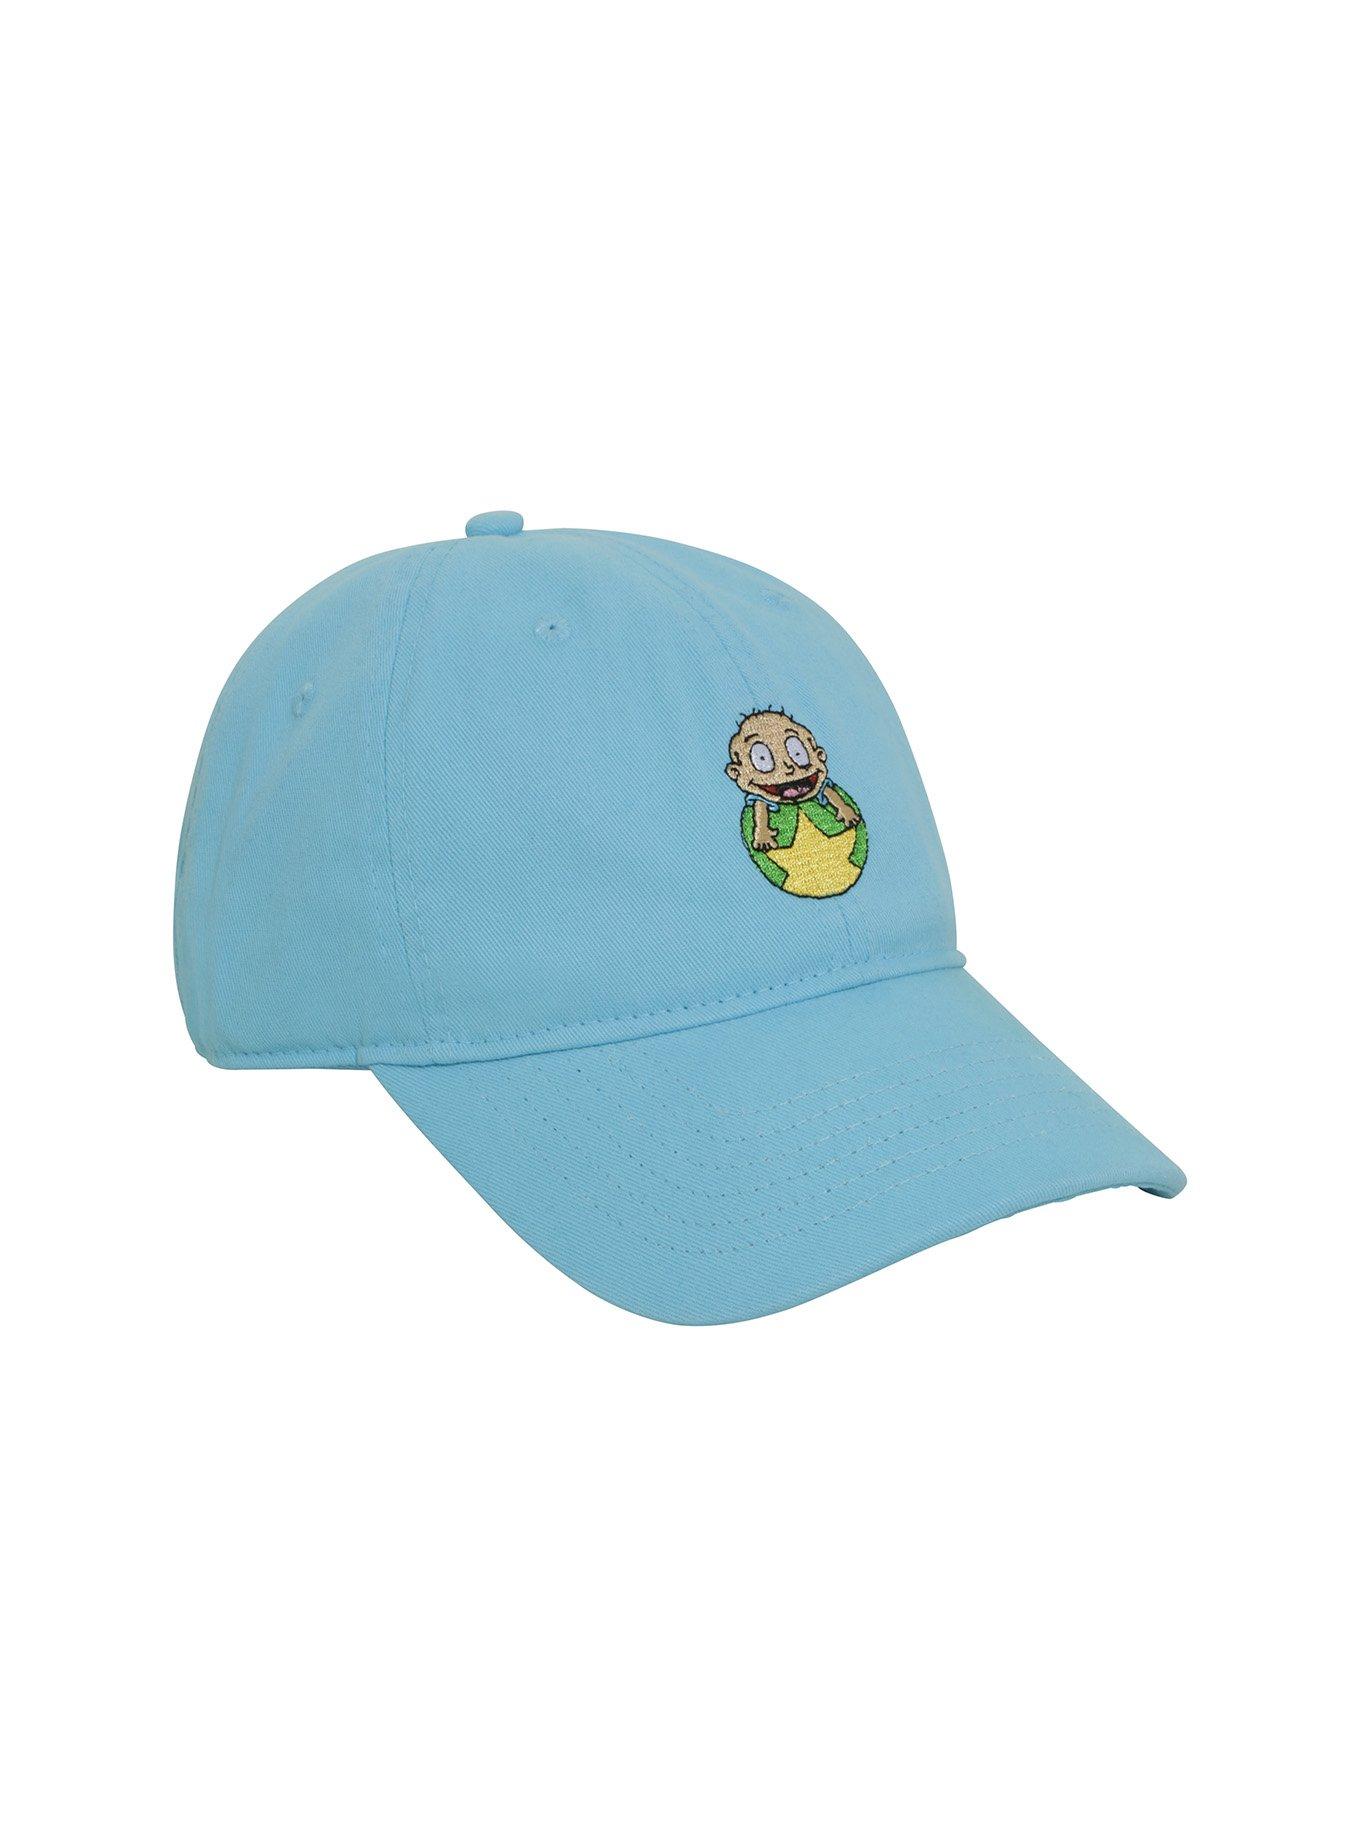 Tech Design Bad Bunny Baseball Cap Embroidered Cotton Adjustable Dad Hat  Teal